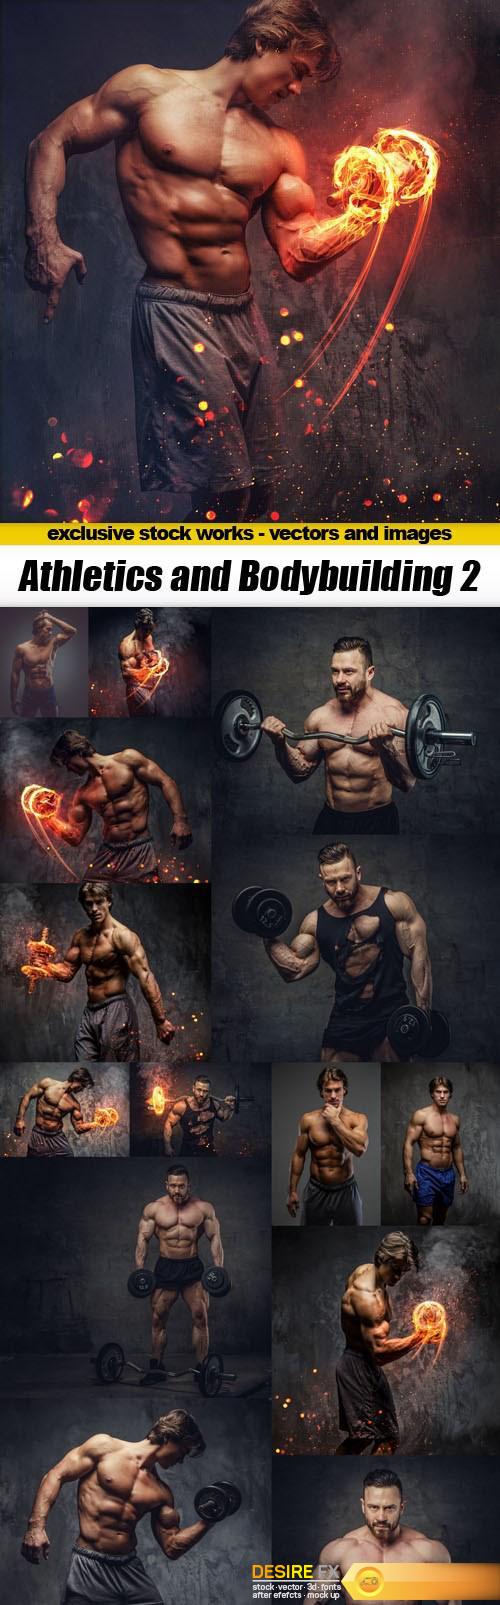 Athletics and Bodybuilding 2 - 15xUHQ JPEG